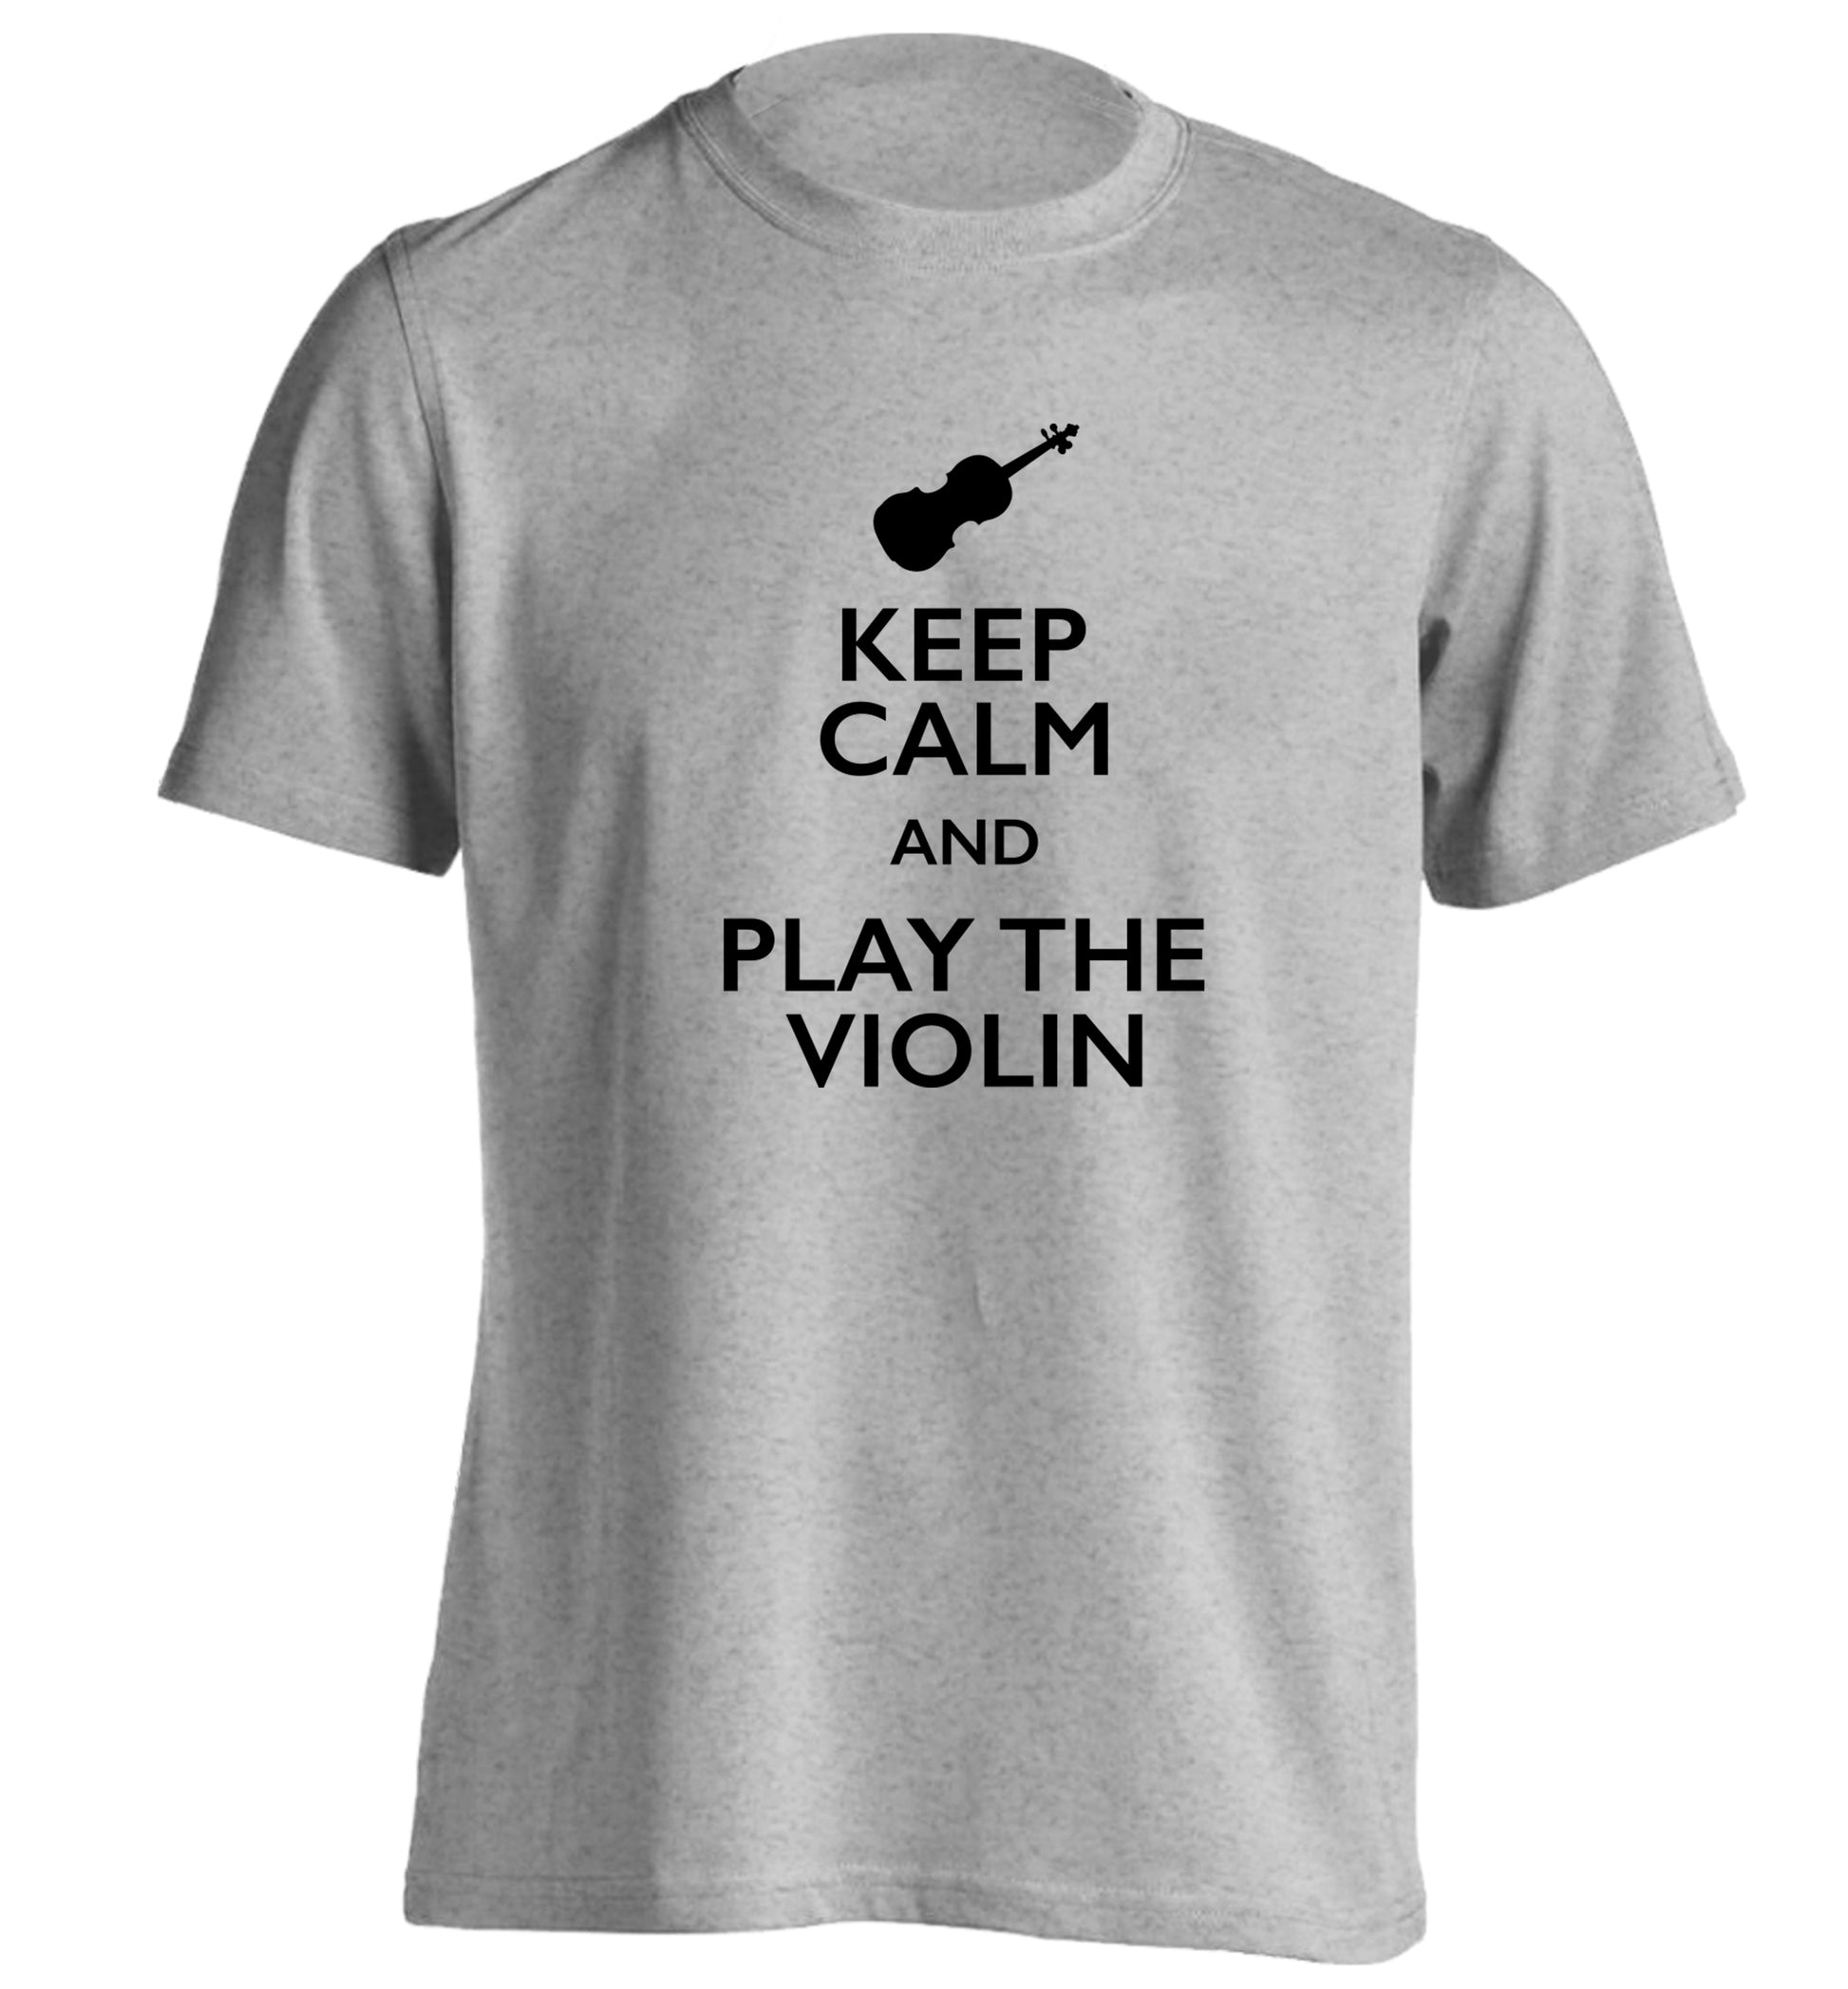 Keep calm and play the violin adults unisex grey Tshirt 2XL